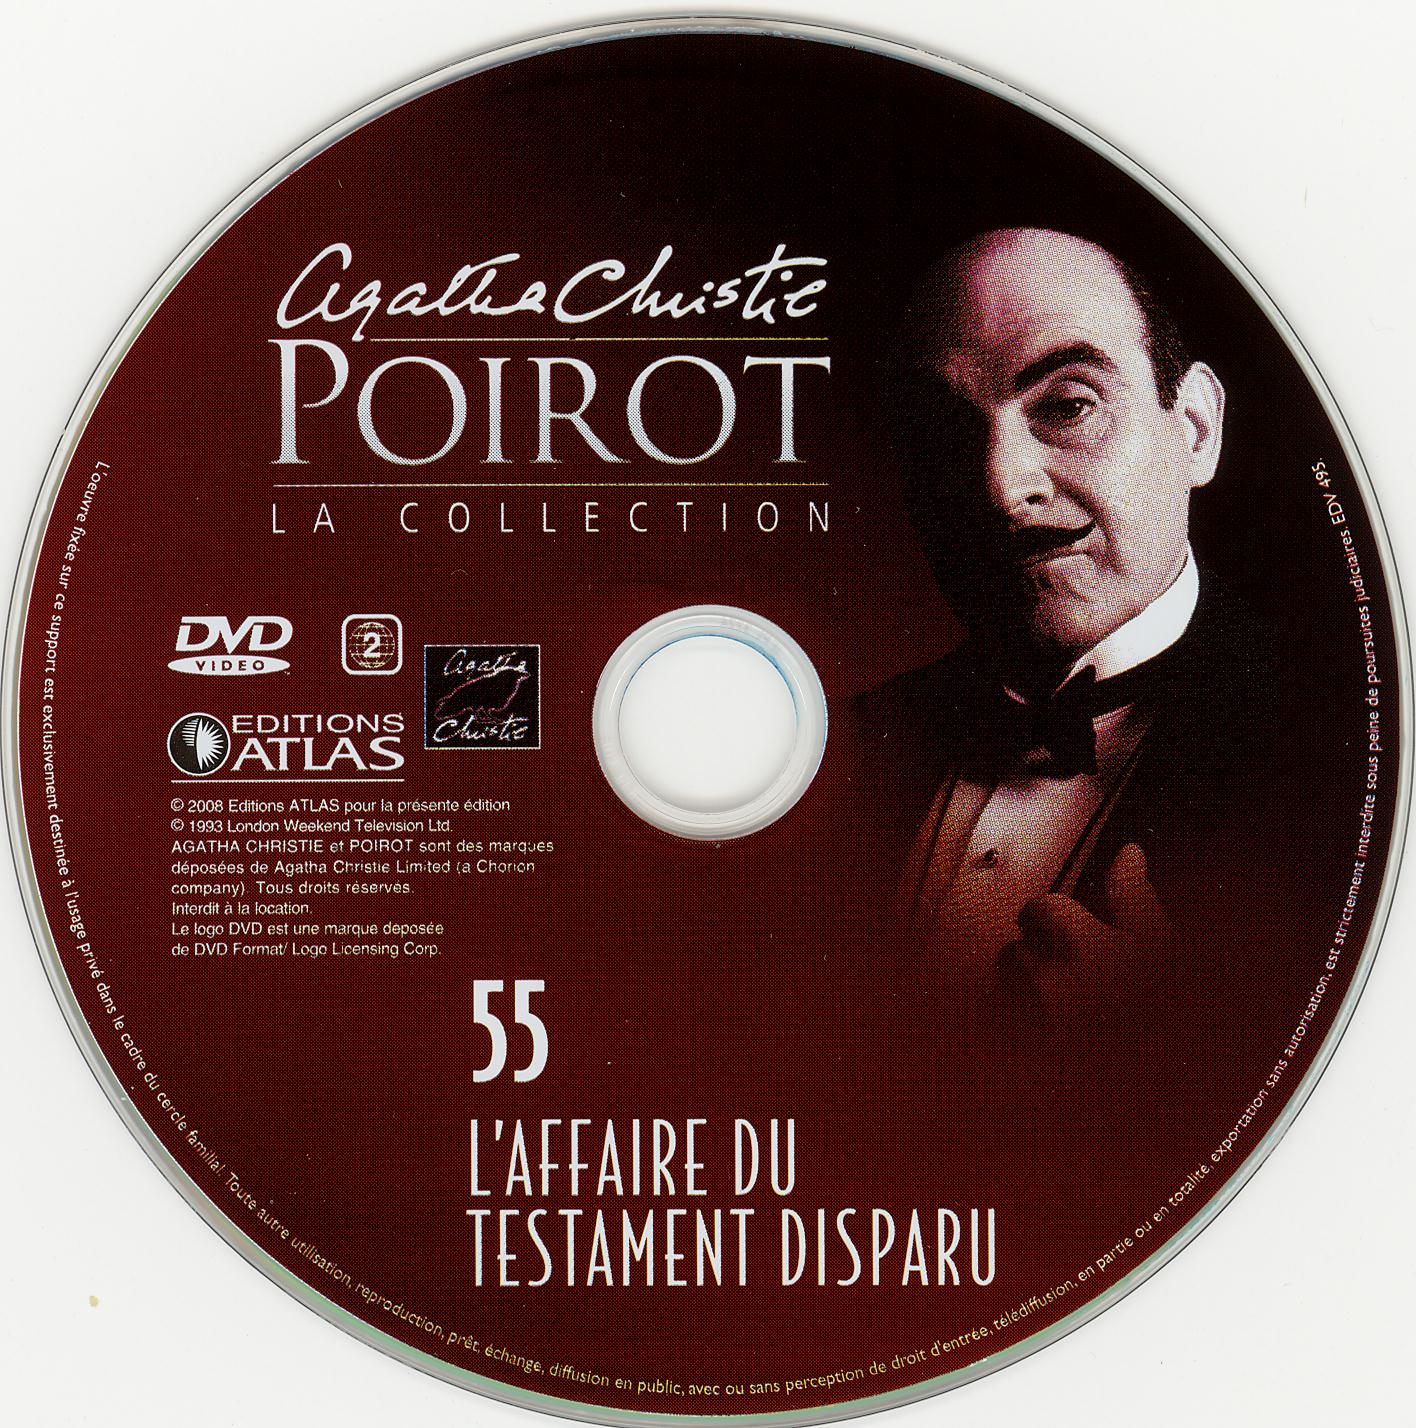 Hercule Poirot vol 55